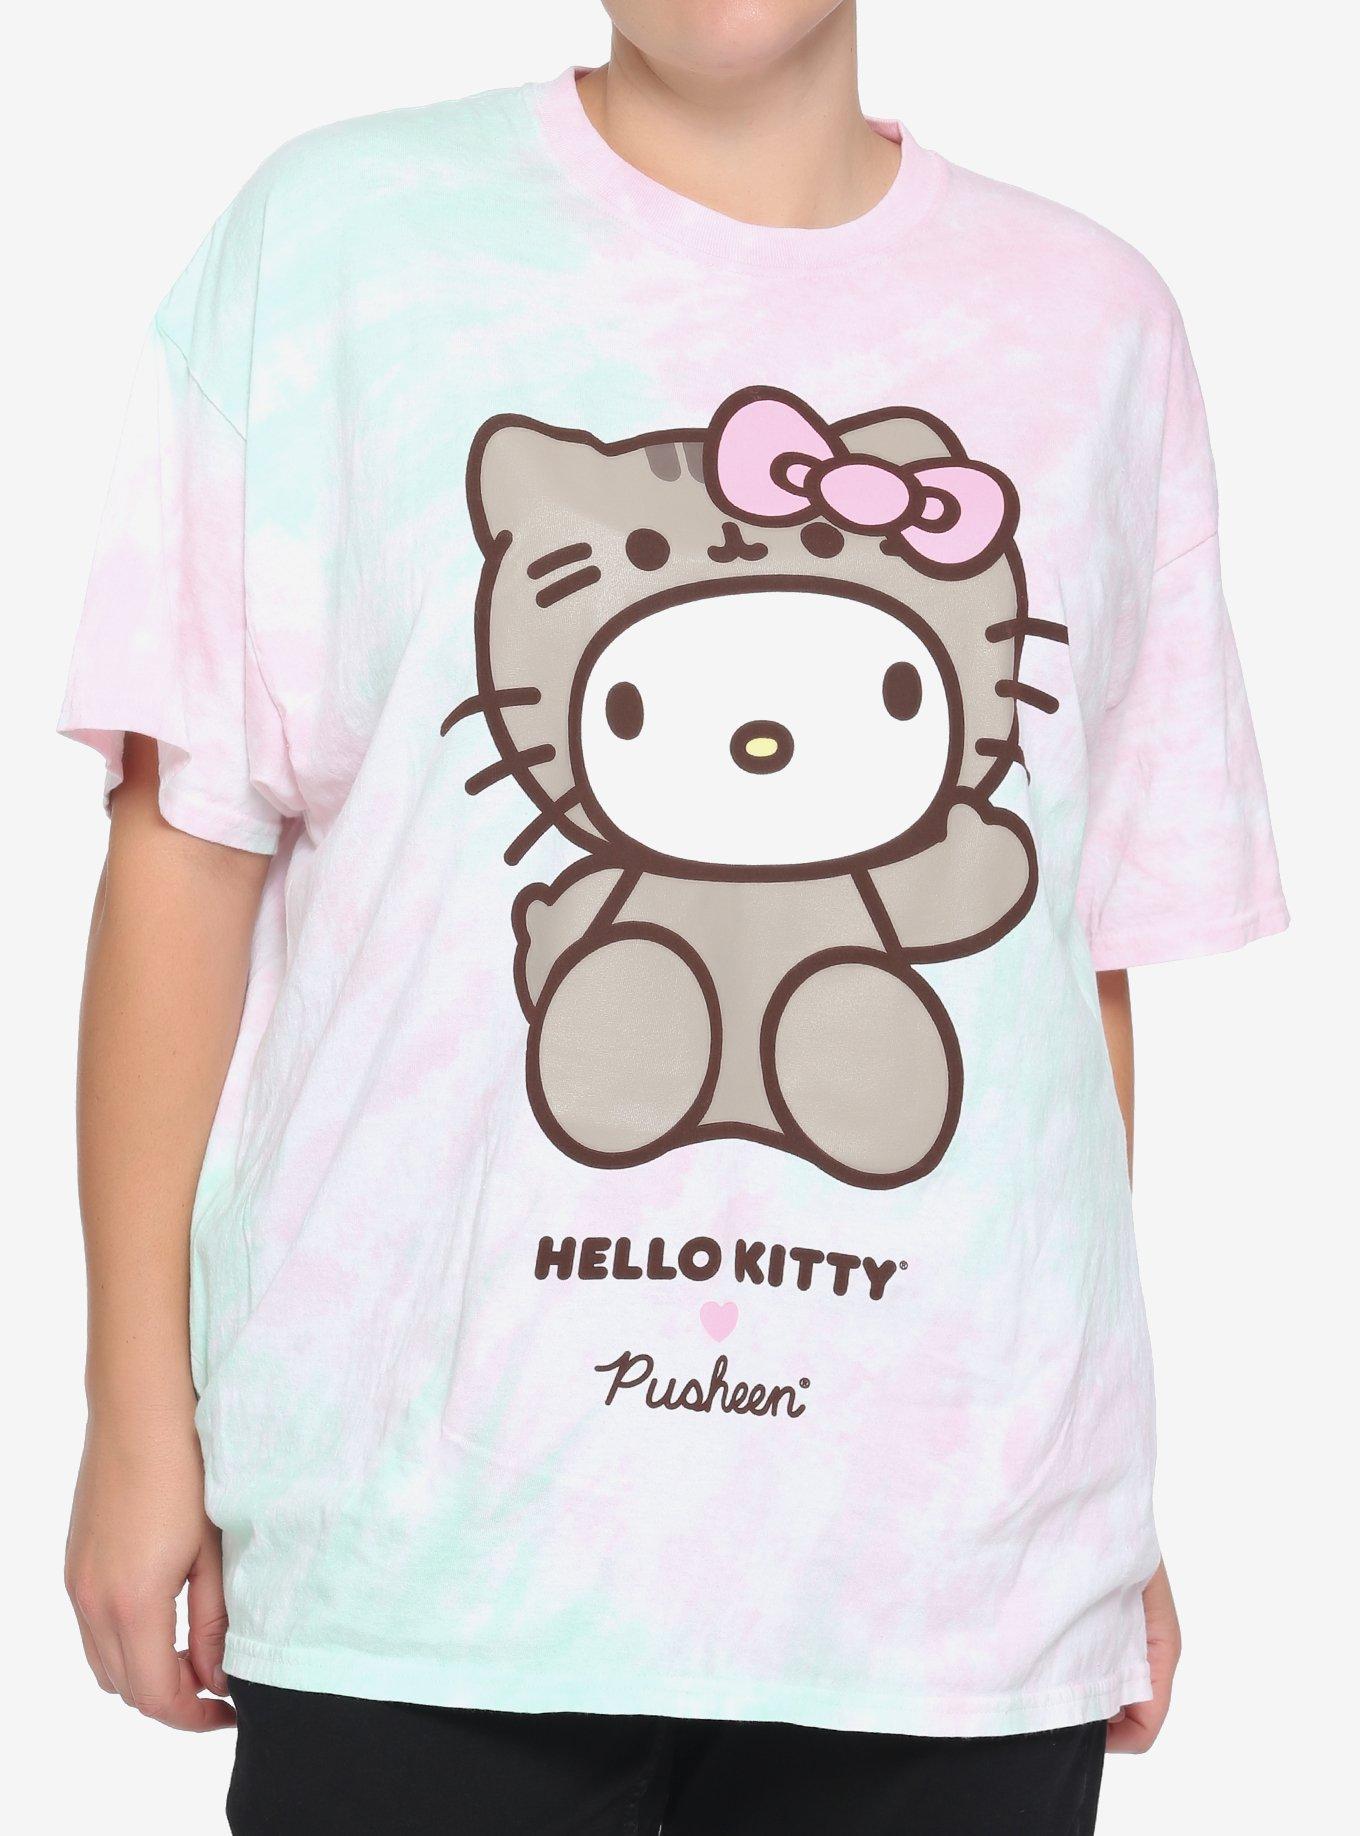 Hello Kitty X Pusheen Tie-Dye Boyfriend Fit Girls T-Shirt Plus Size ...